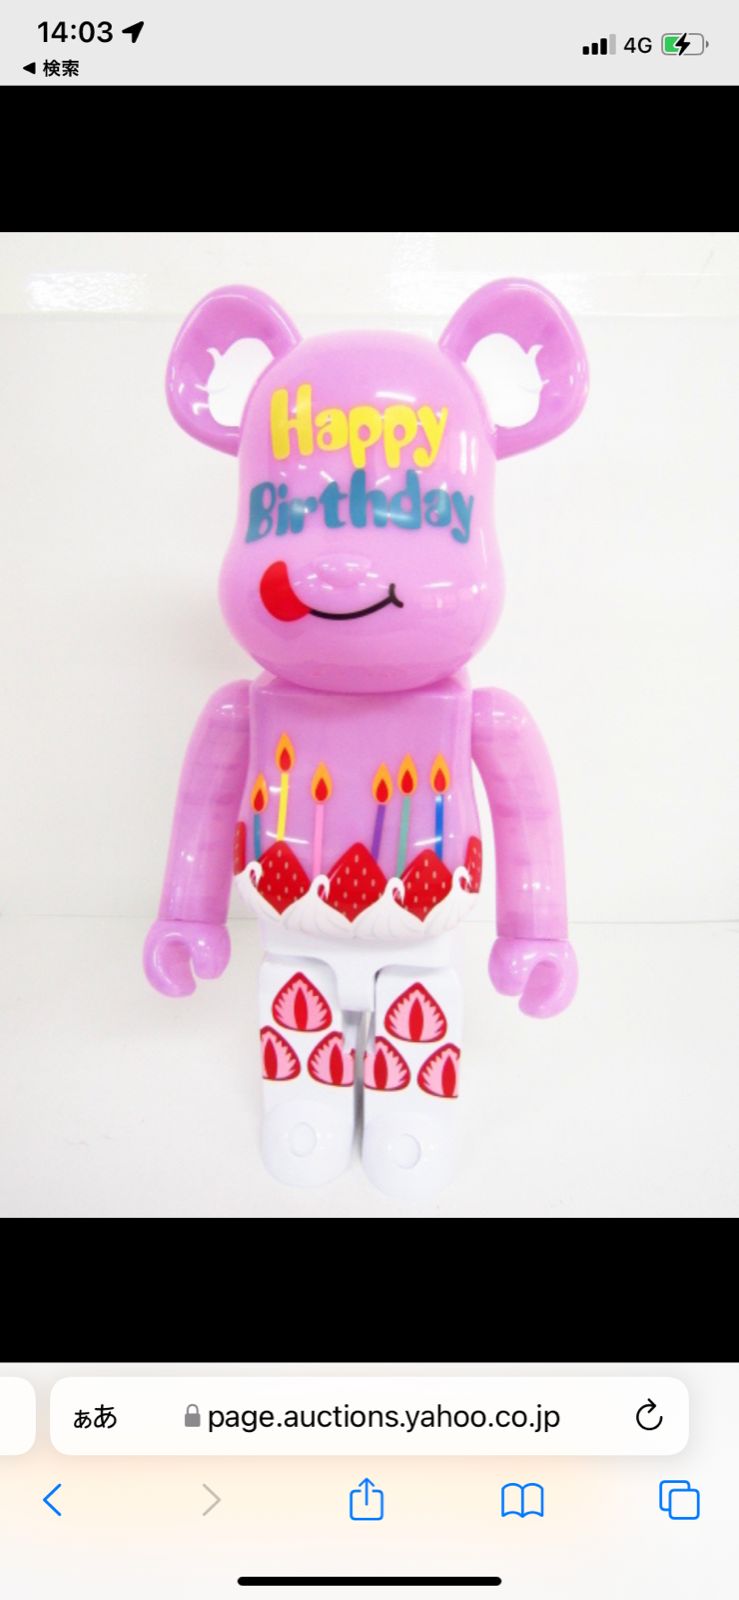 Be@brick happy birthday 1000% - electro-tel.com